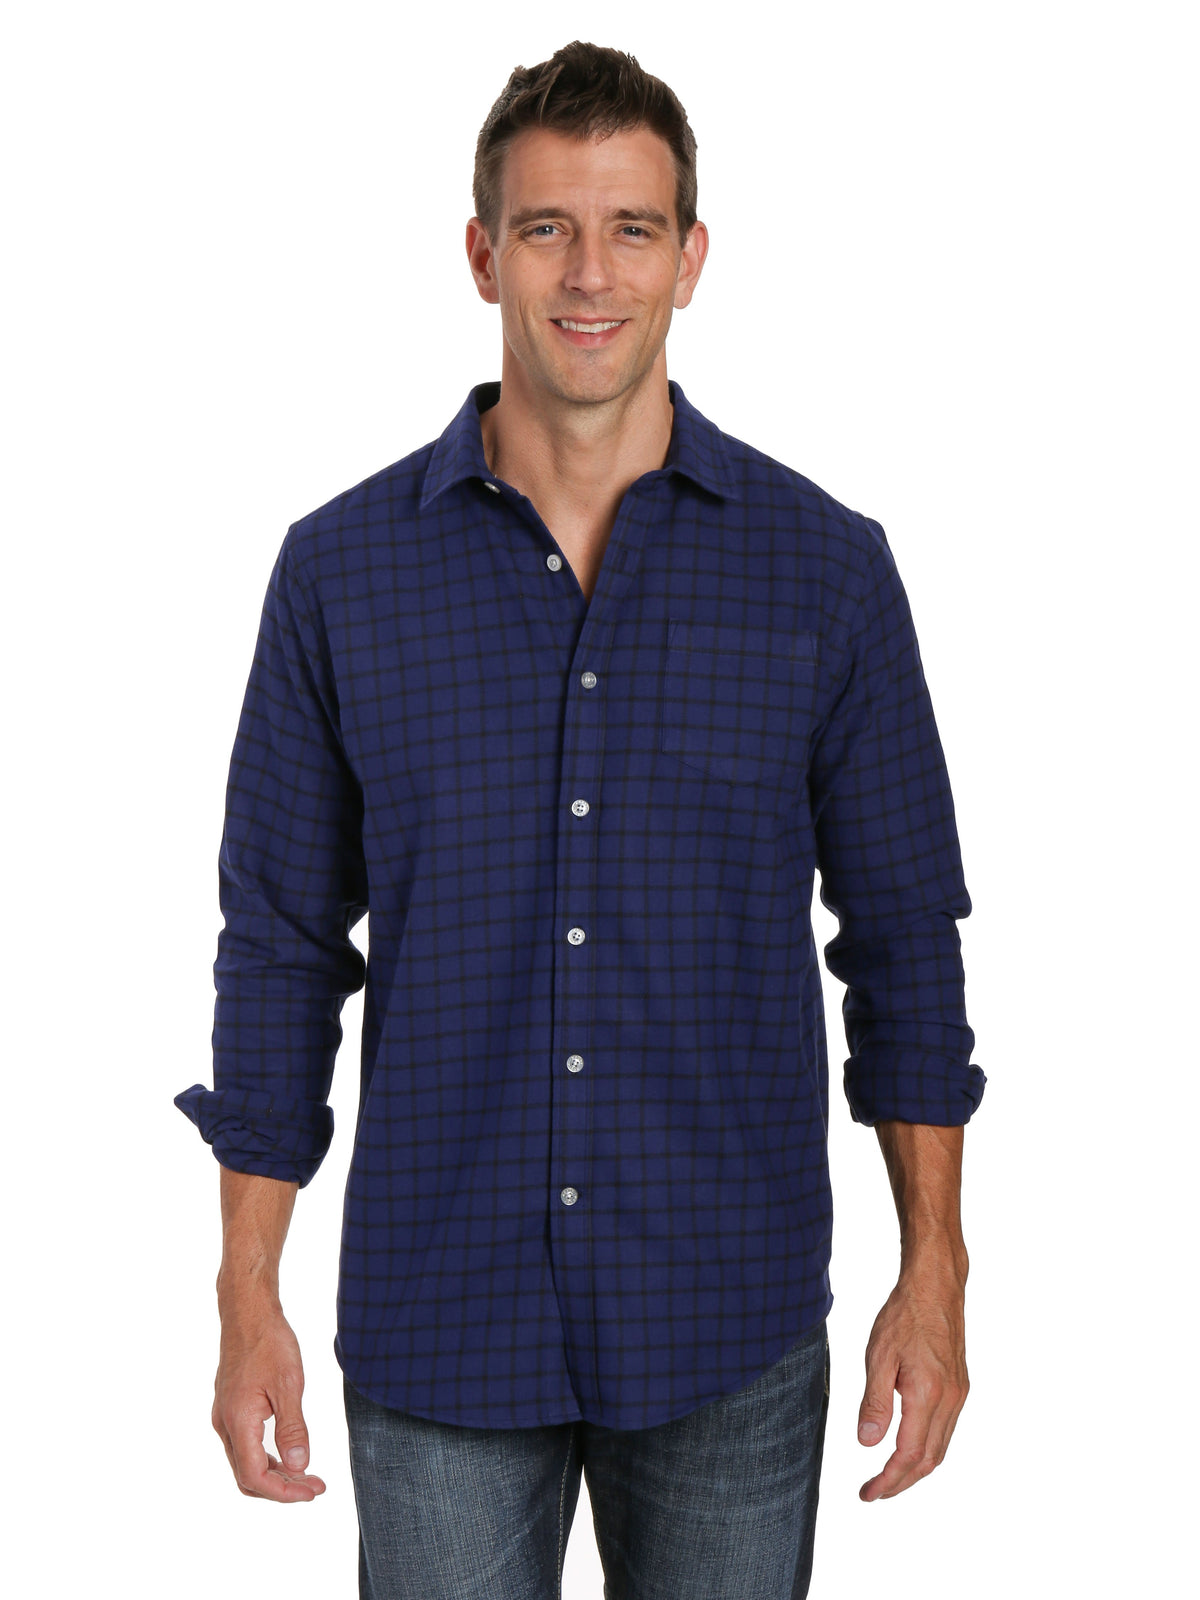 Mens 100% Cotton Flannel Shirt - Regular Fit - Checks - Blue-Black